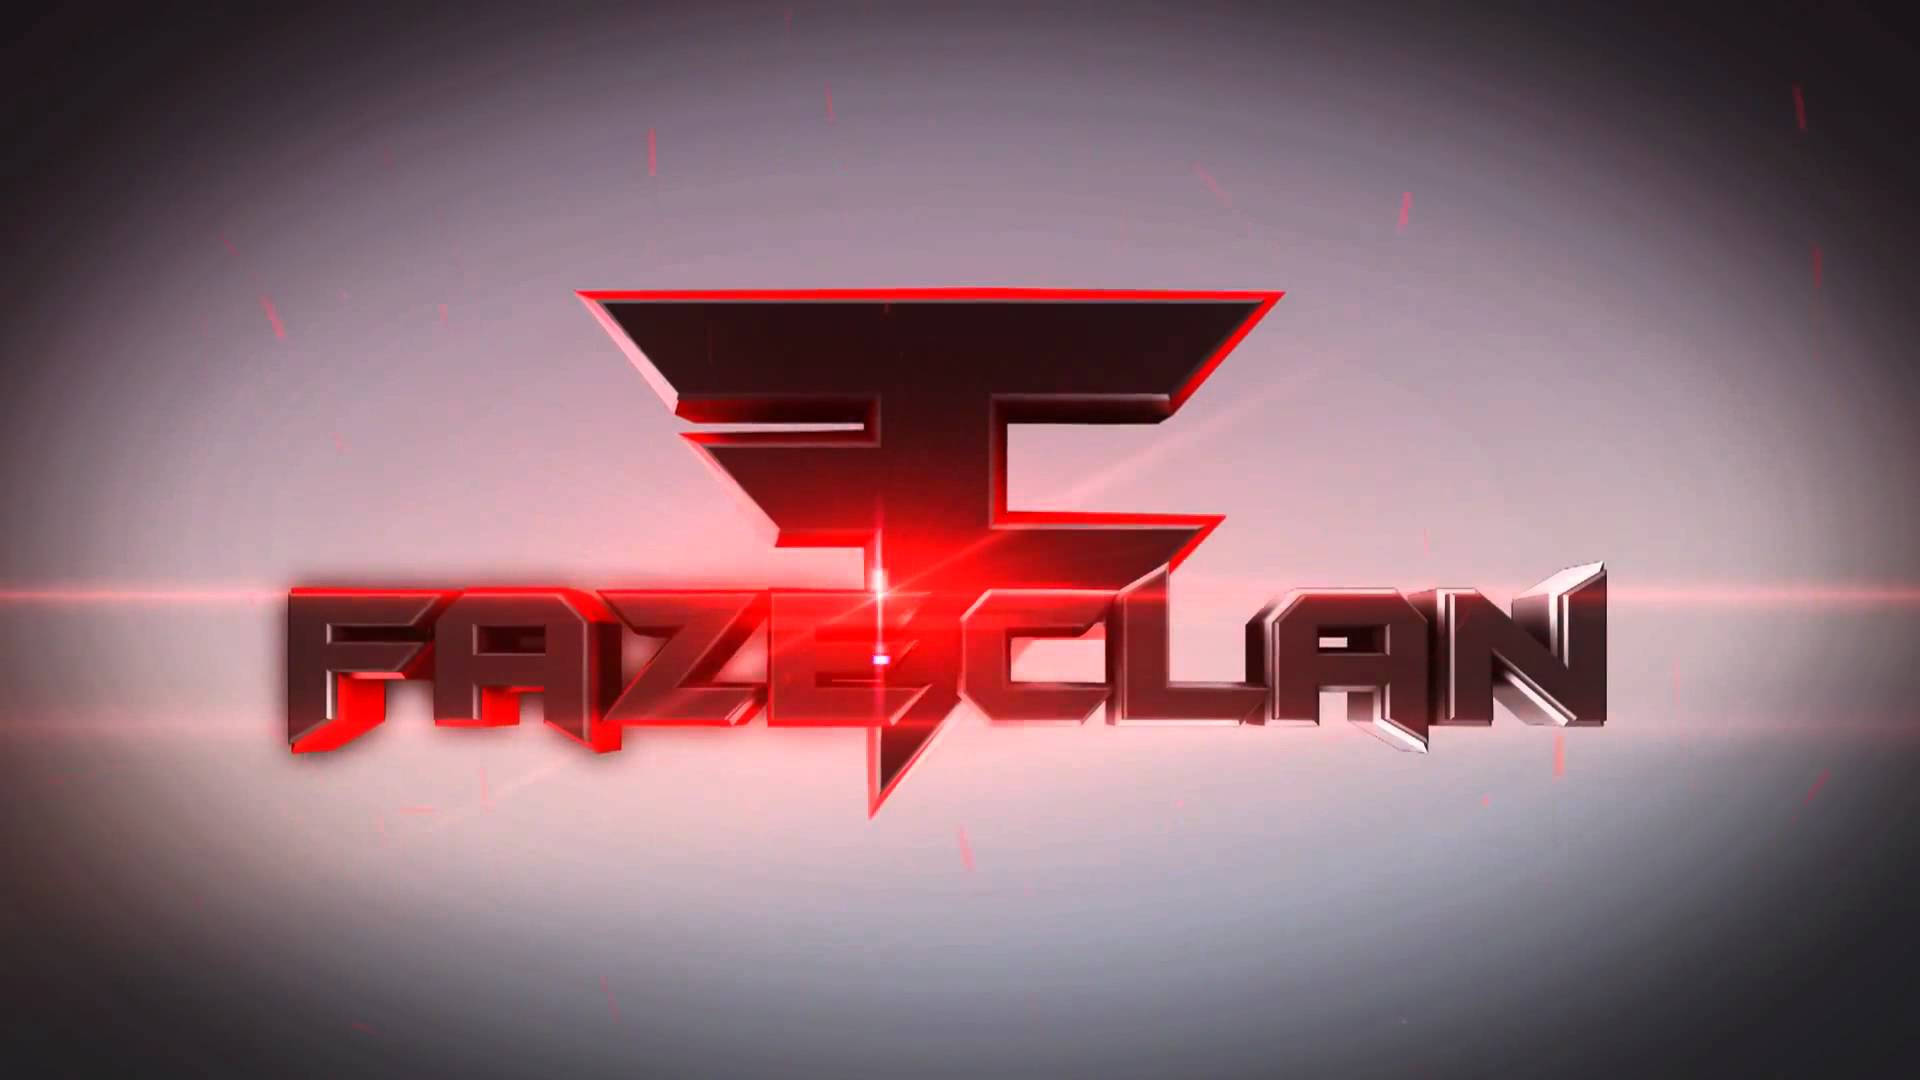 Faze Clan Cool Red Logo Wallpaper